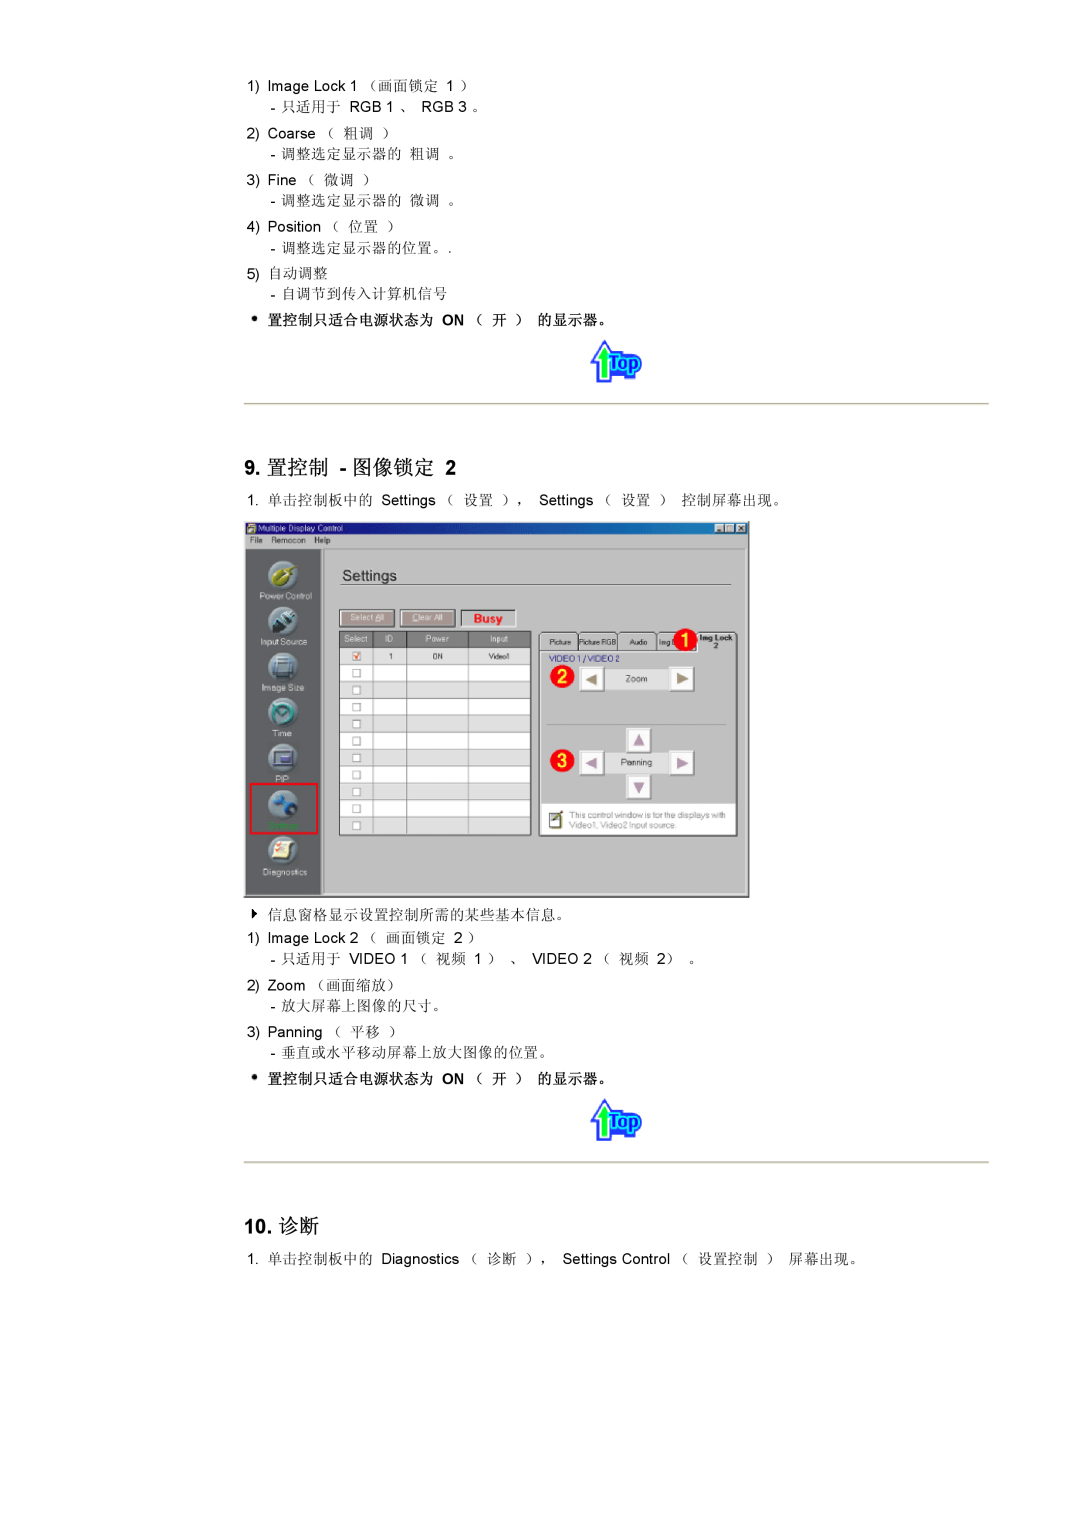 Samsung CK40PSNBG/EDC manual 10. 诊断, 置控制只适合电源状态为 On （ 开 ） 的显示器。, 9. 置控制 - 图像锁定, Position （ 位置 ）, Image Lock 2 （ 画面锁定 2 ） 